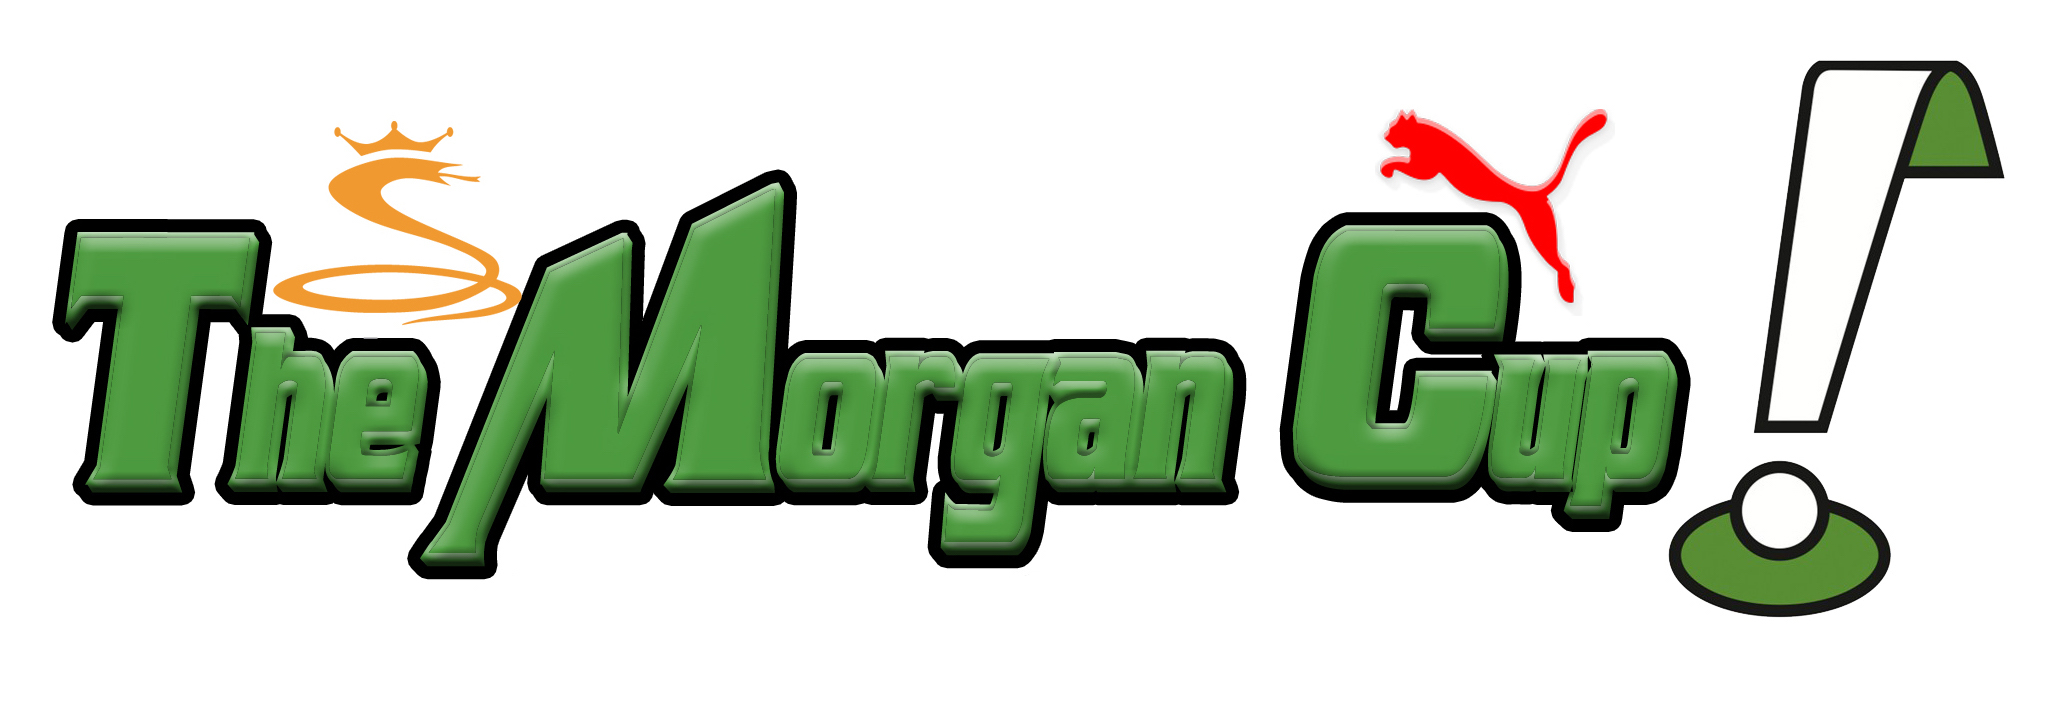 The Morgan Cup